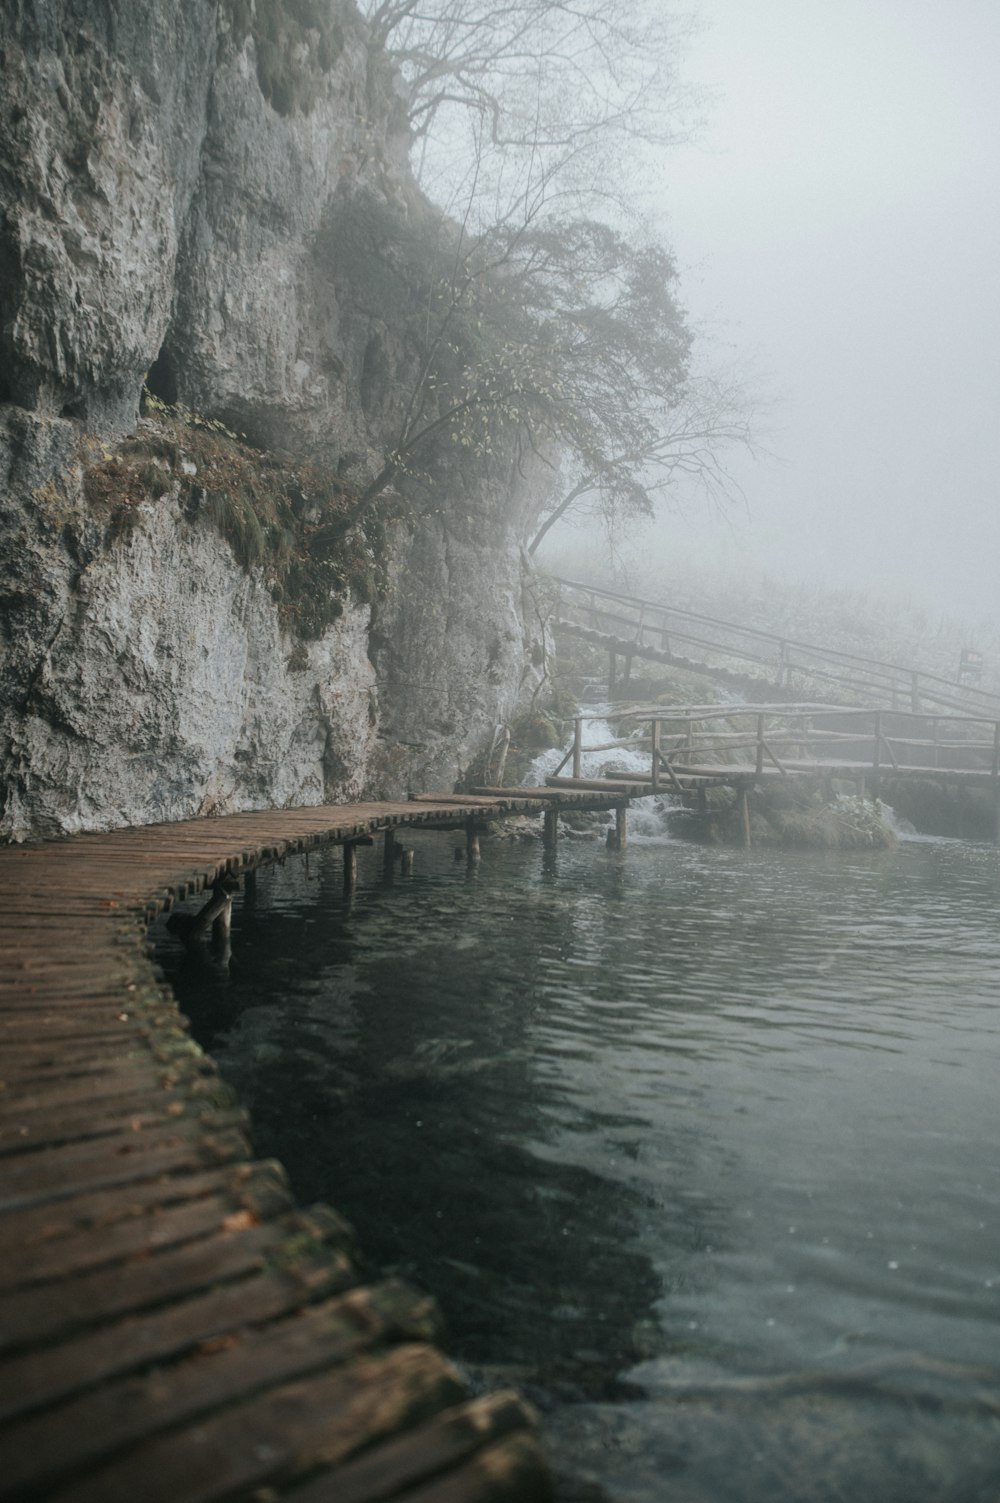 a wooden walkway over water